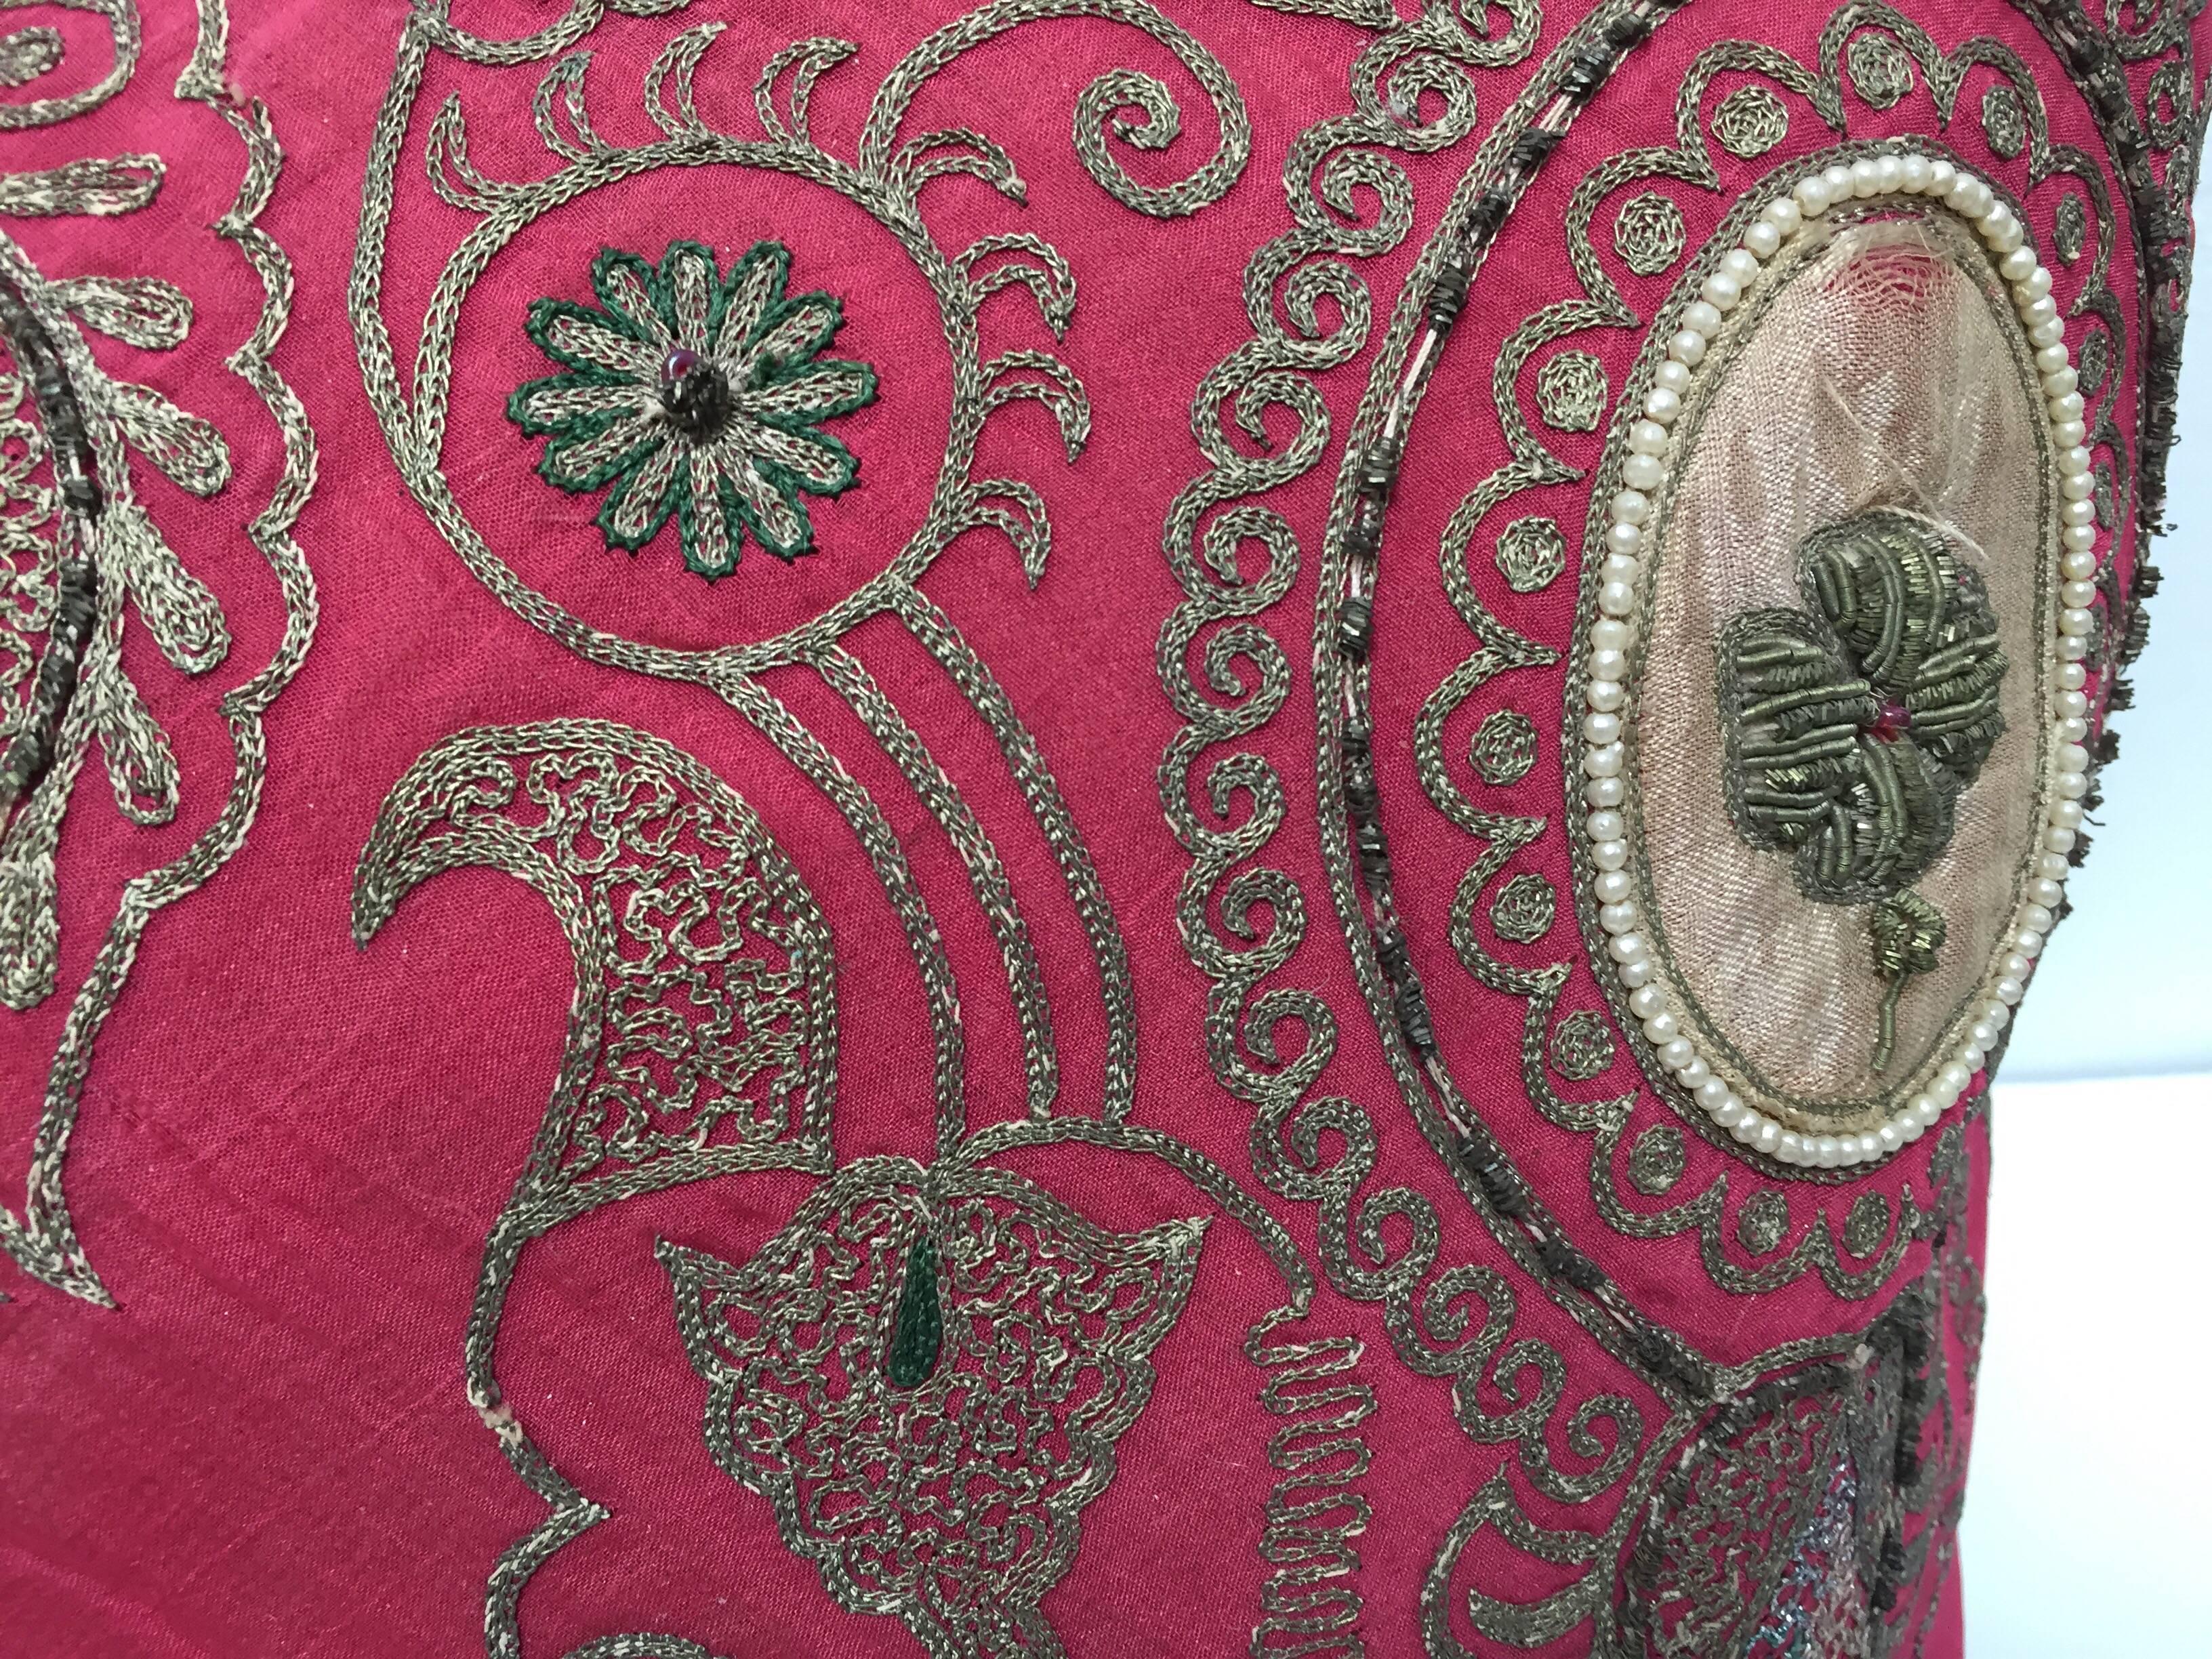 Antique Turkish Ottoman Silk Pillows with Metallic Threads a Pair 11